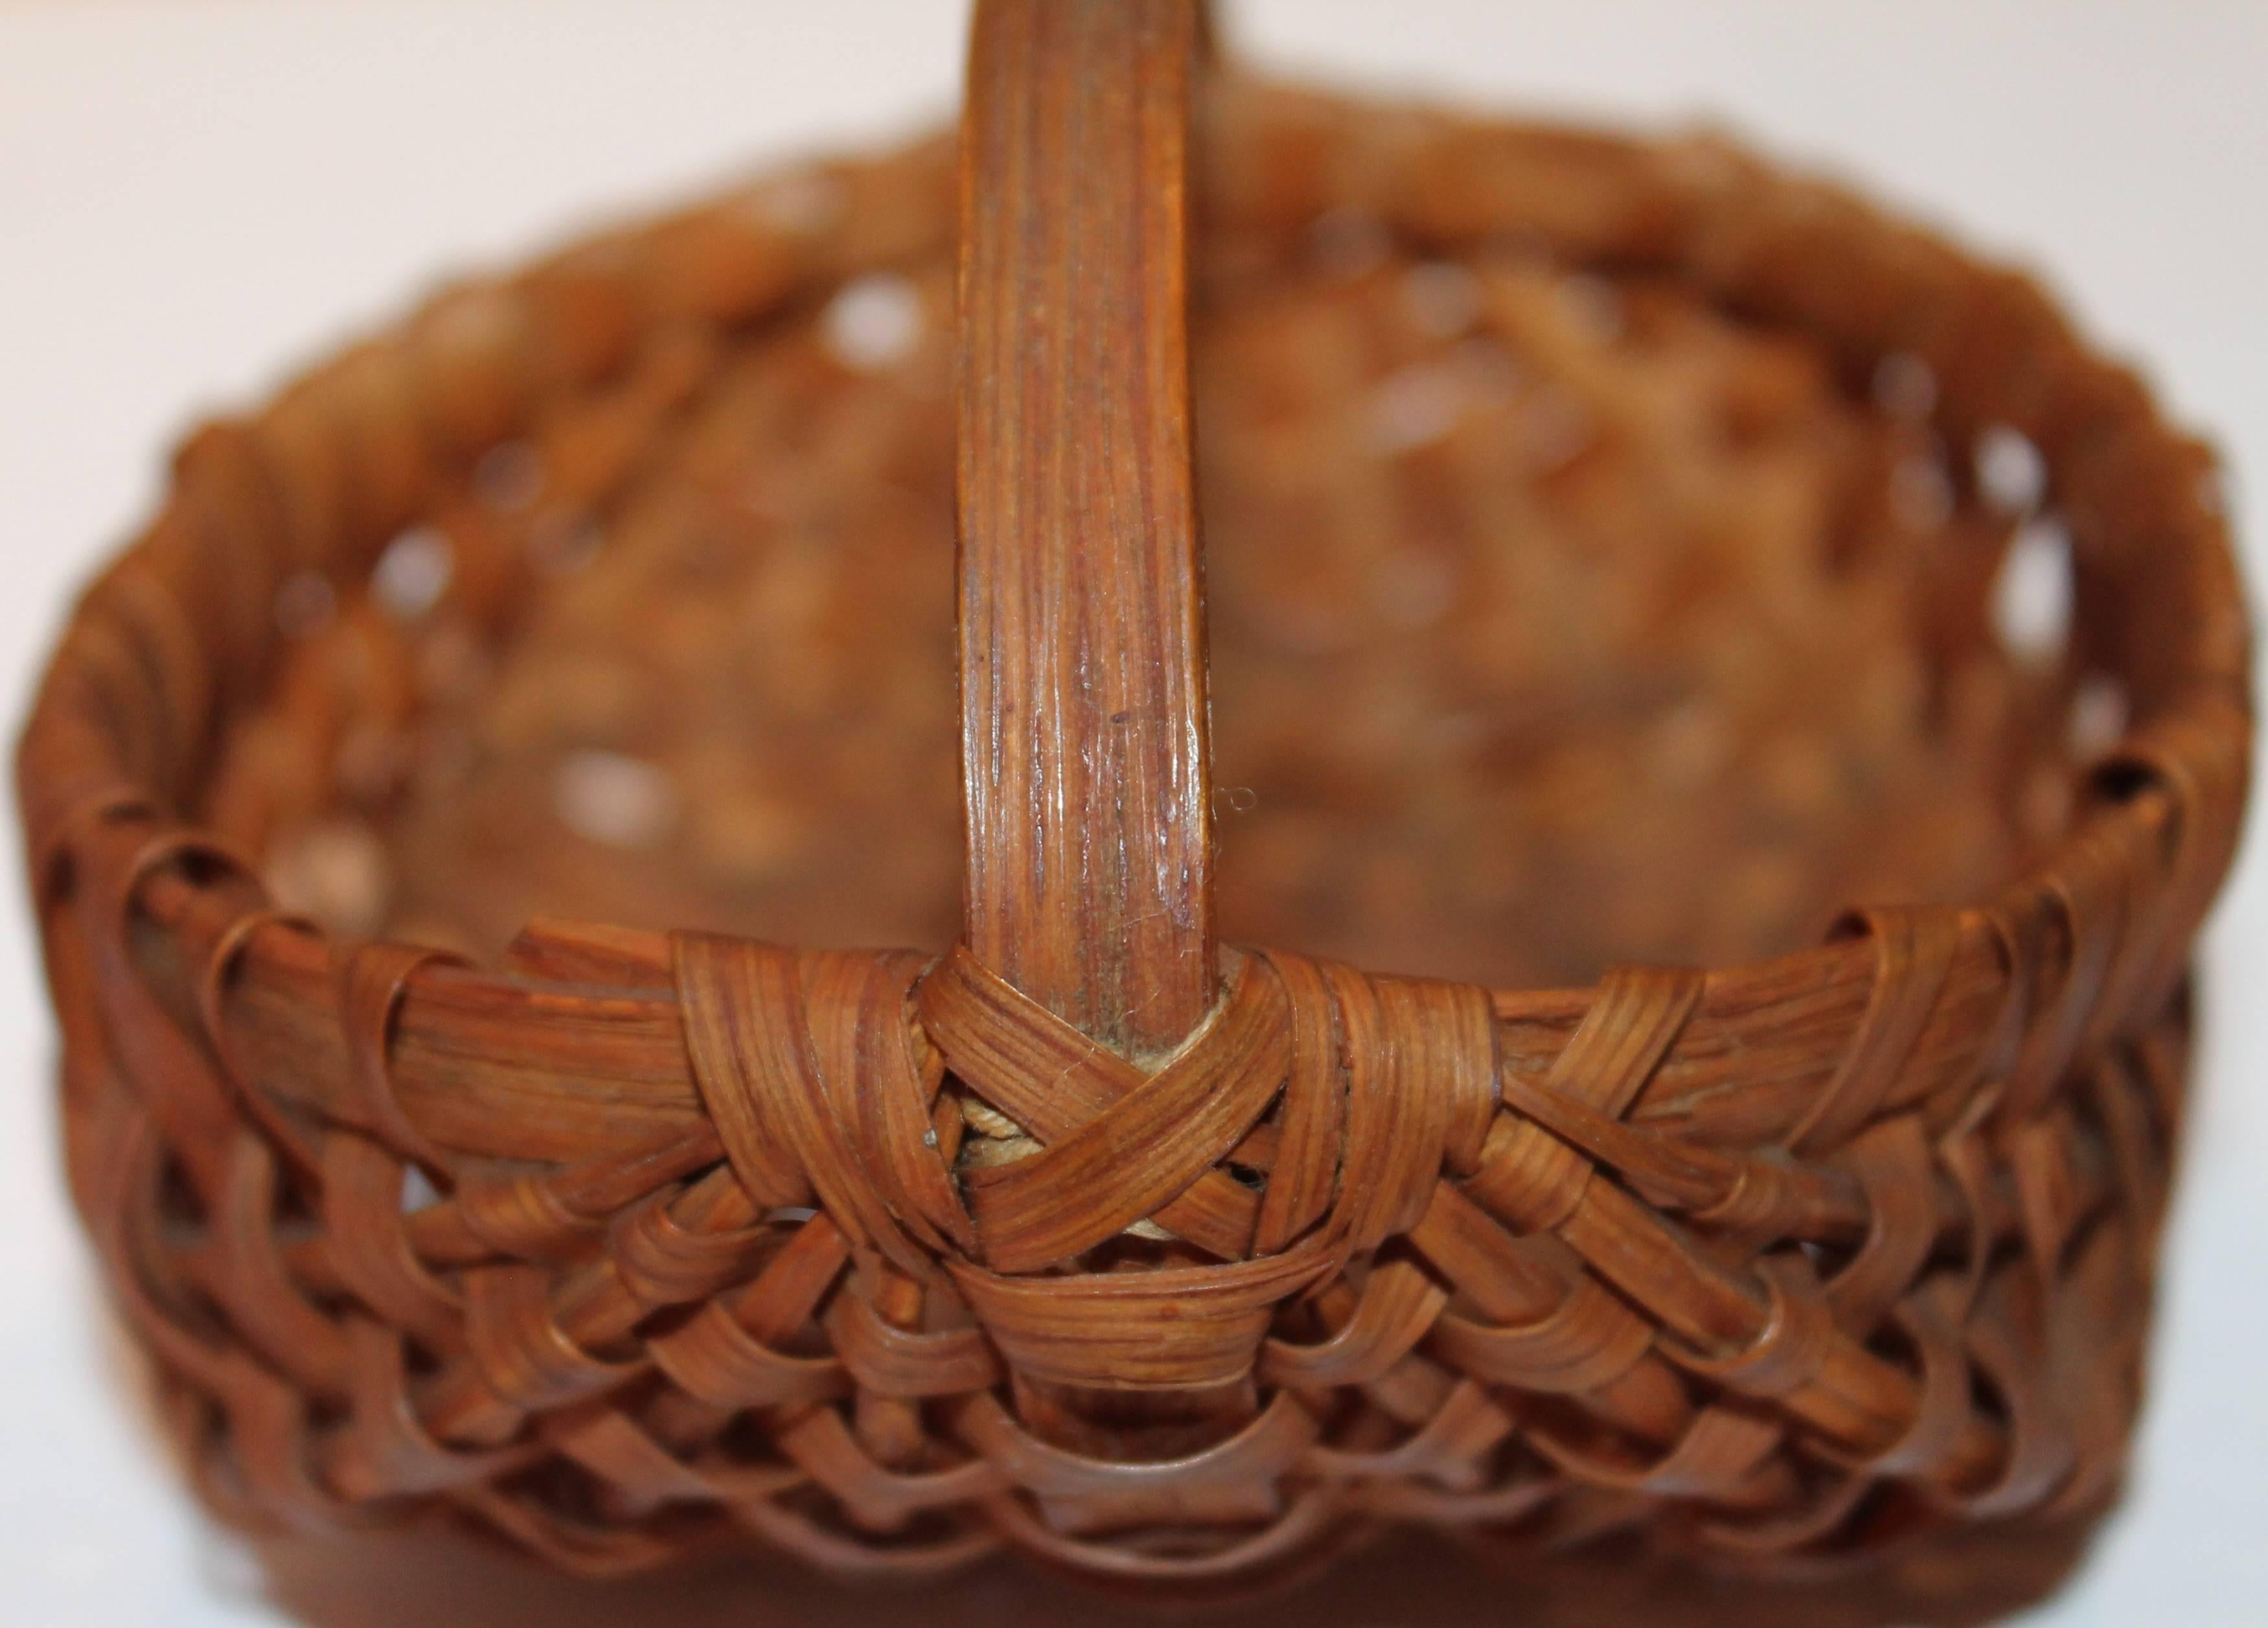 19th century handmade baskets